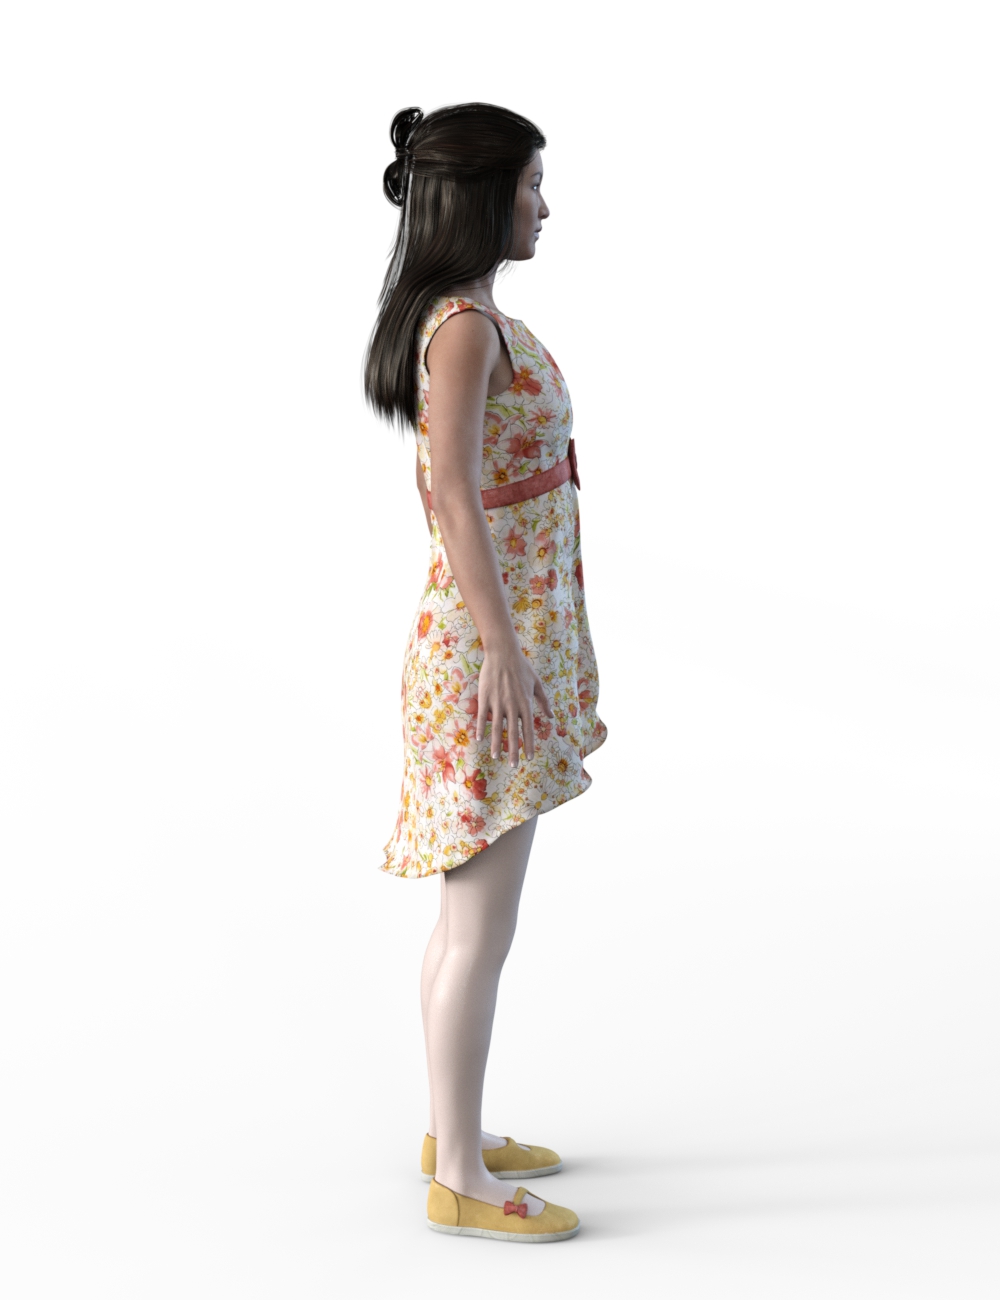 FBX- Mei Lin Sunday Morning Outfit by: Paleo, 3D Models by Daz 3D